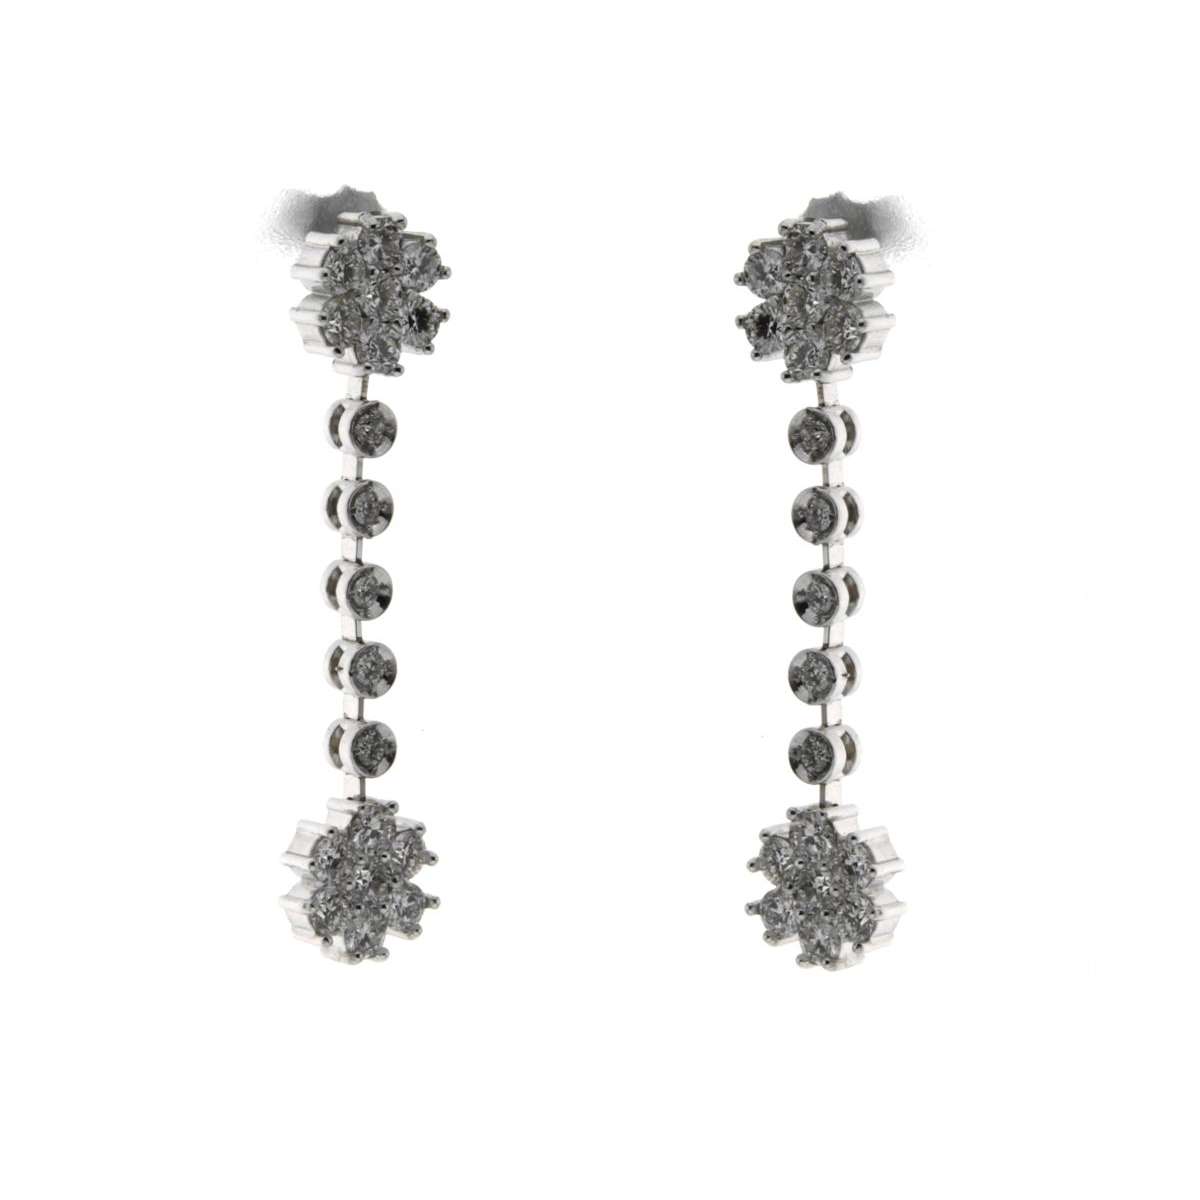 Dangling earrings 2.26 carats selected diamonds F-VVS1 